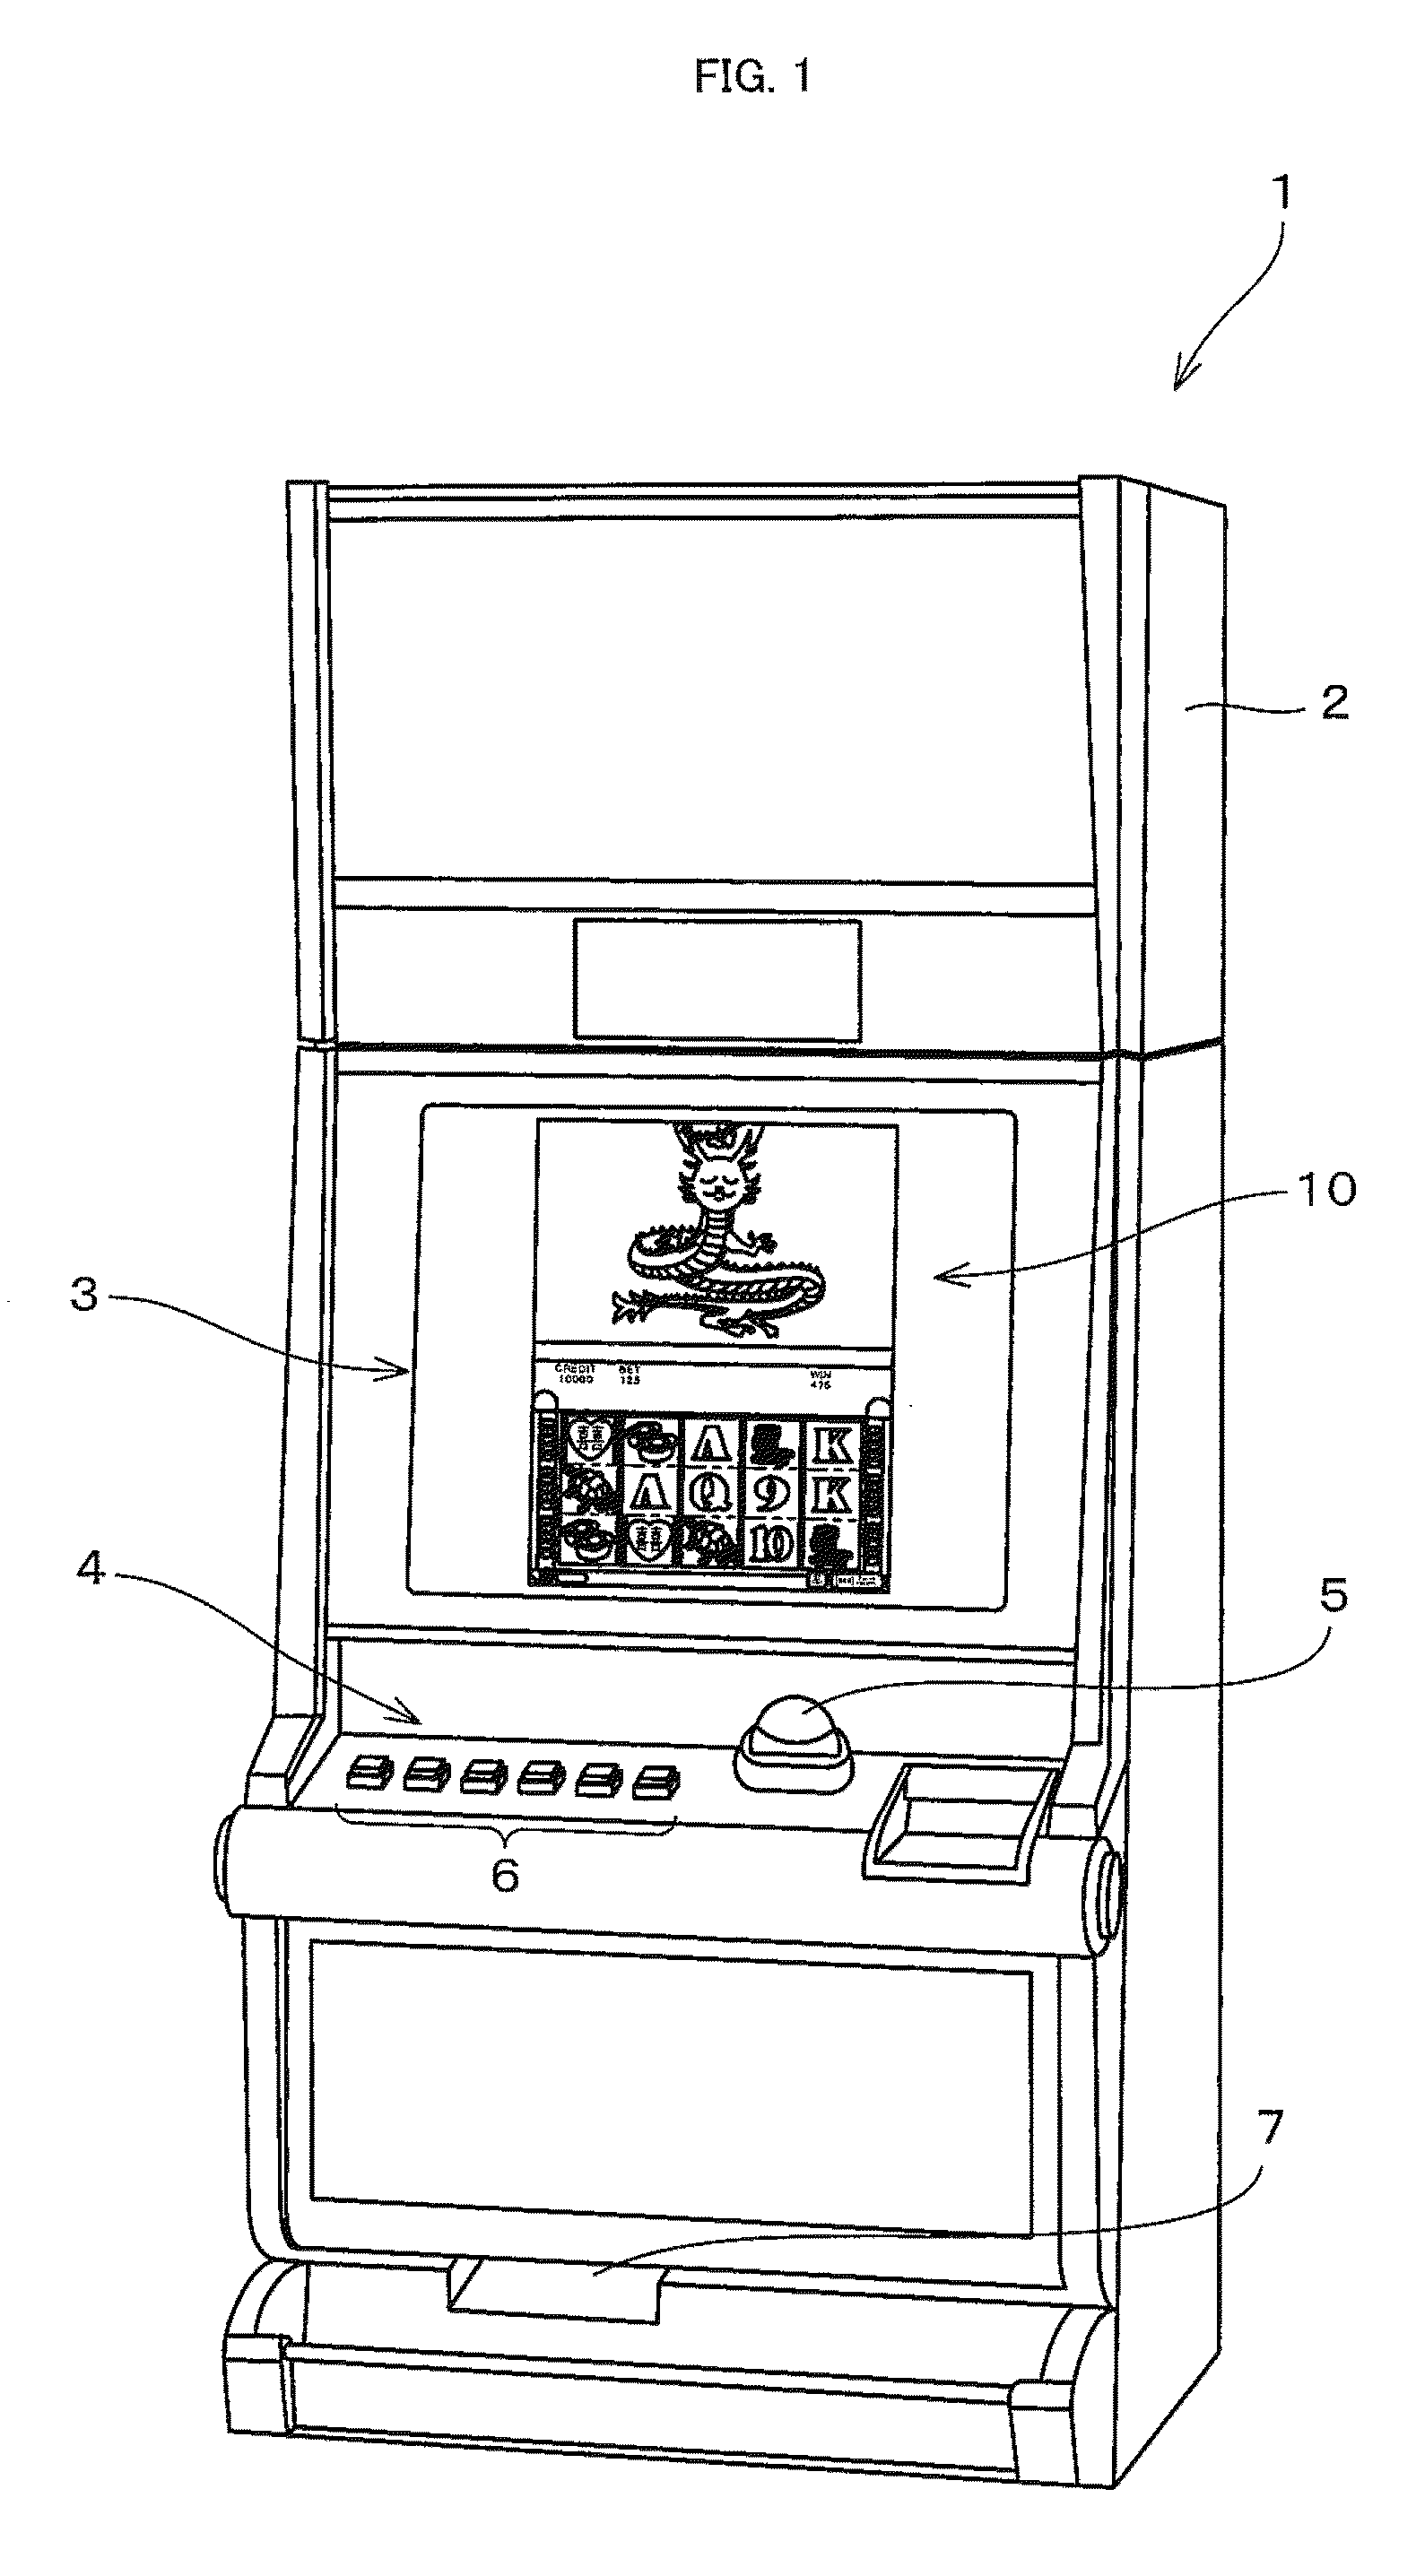 Game machine, method of controlling computer, and storage medium